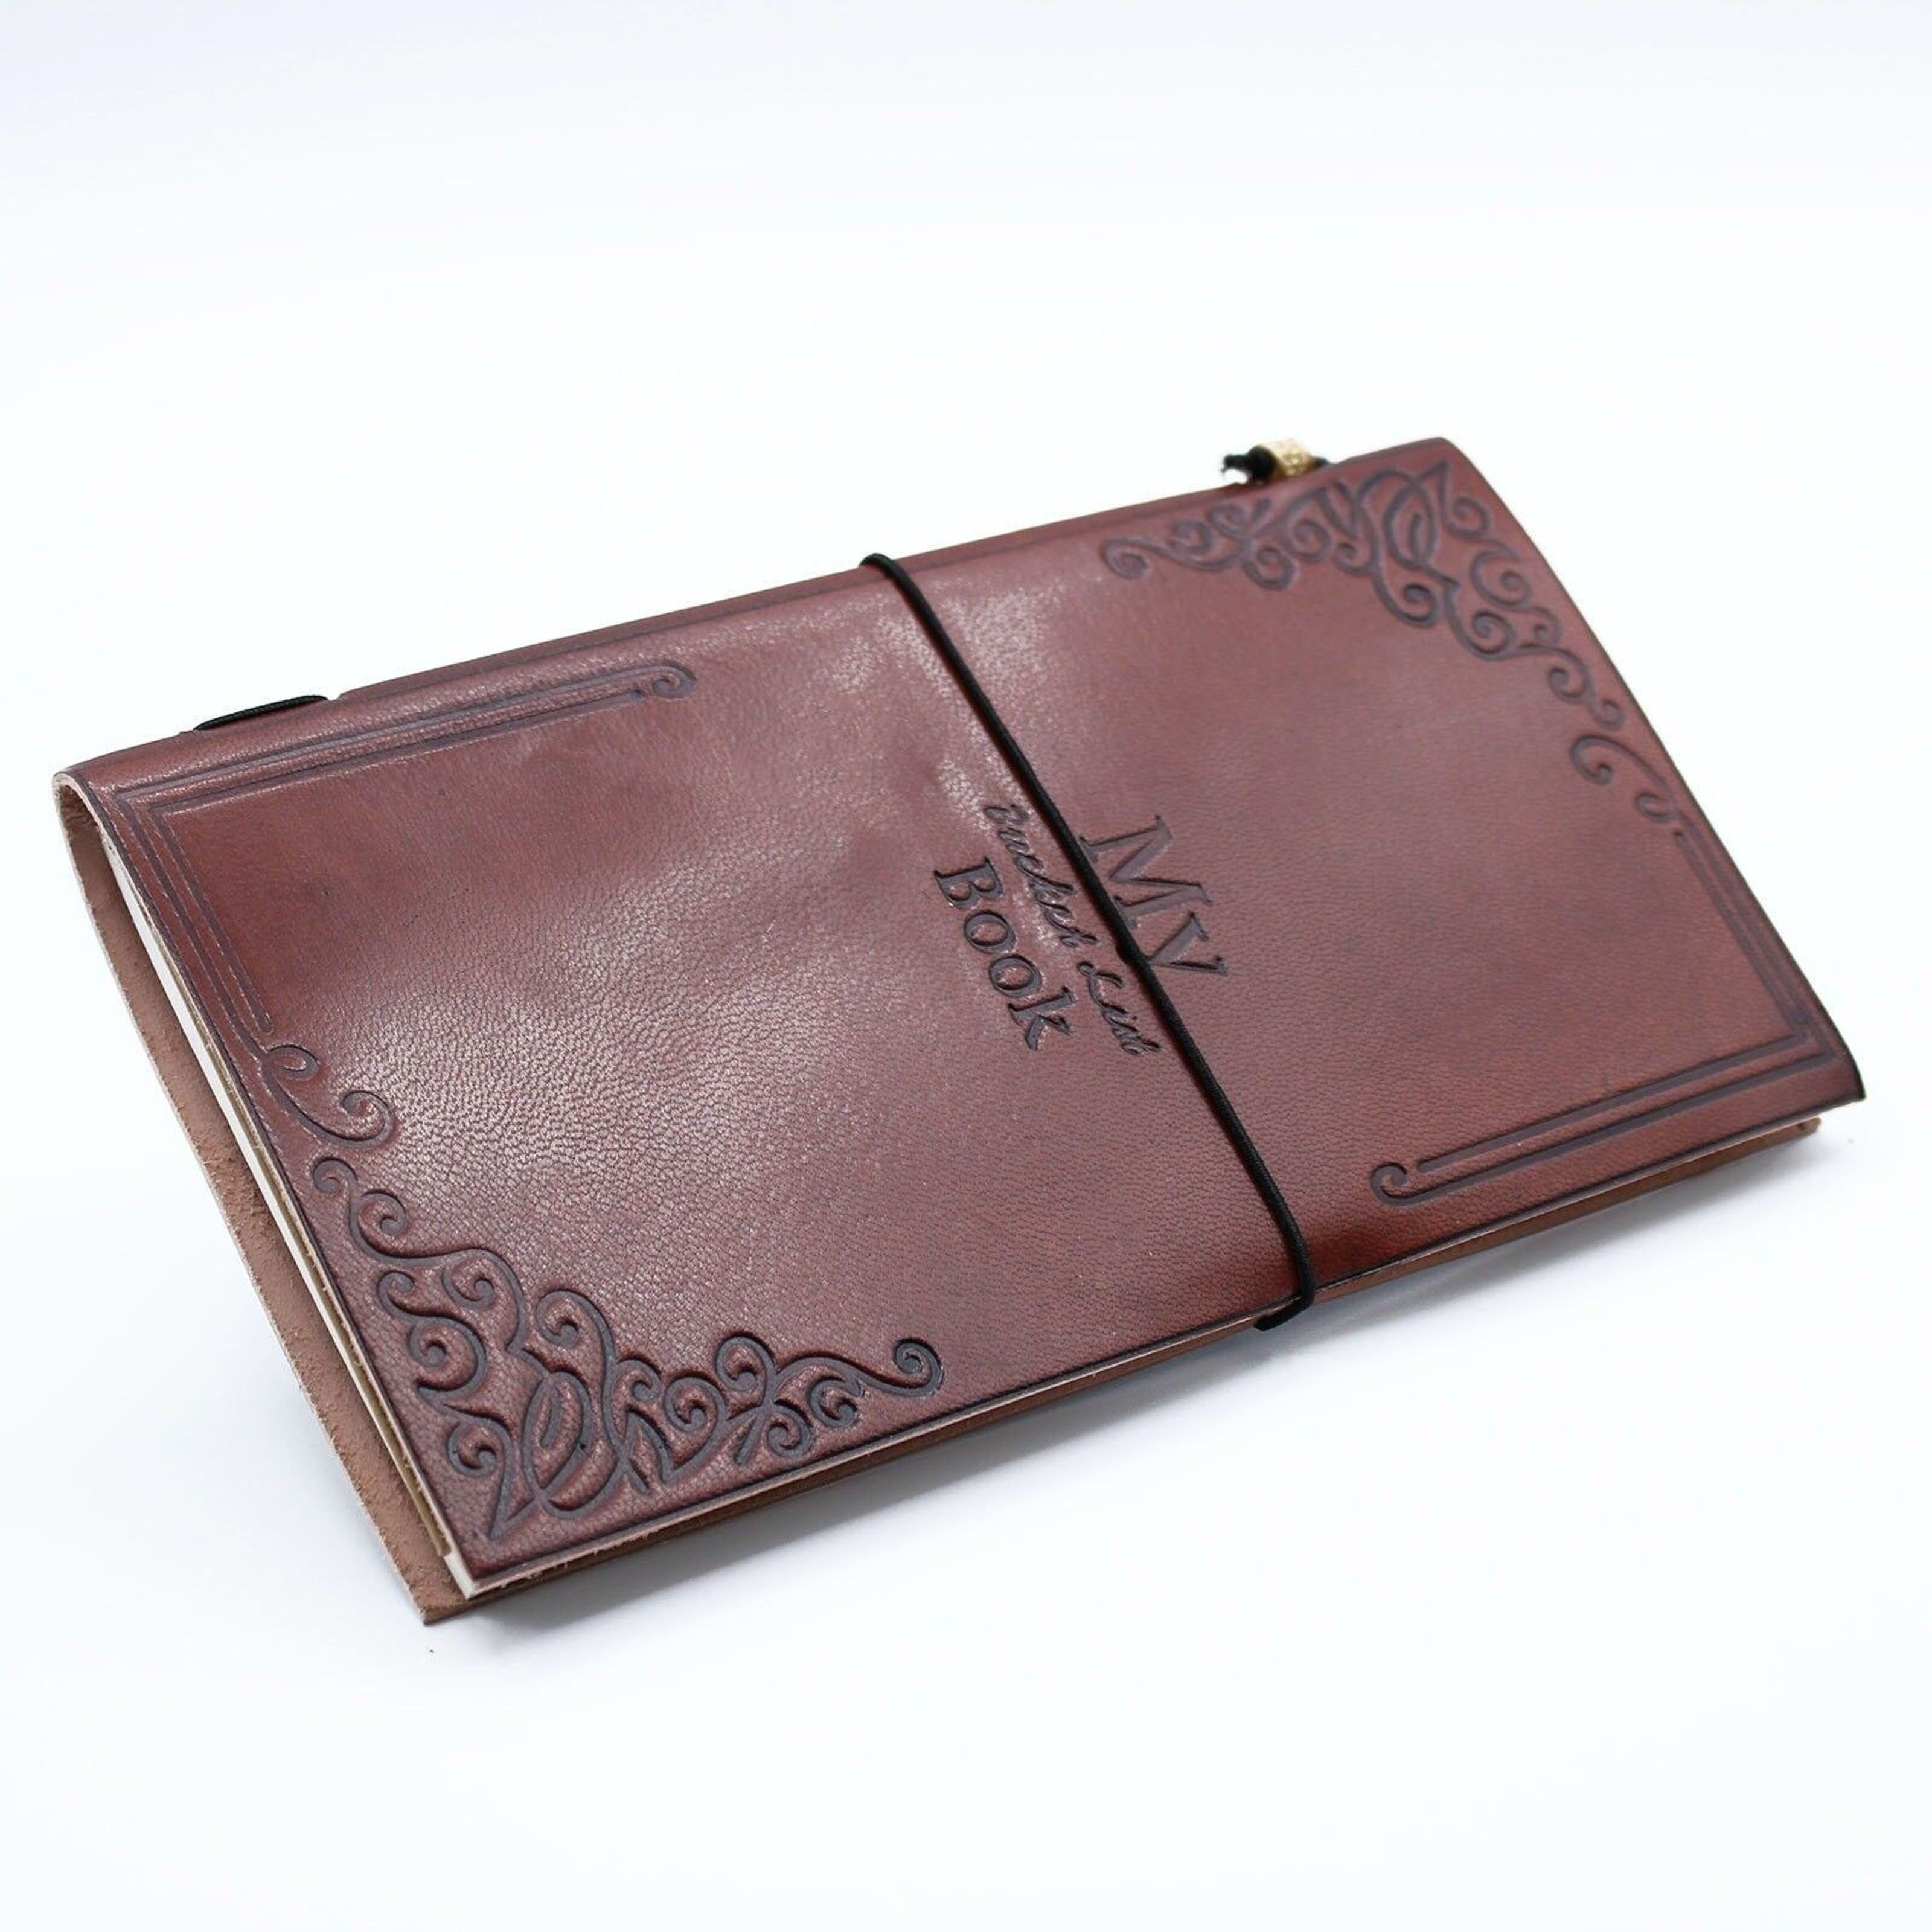 Buy wholesale MSJ-07 - Handmade Leather Journal - My Bucket List